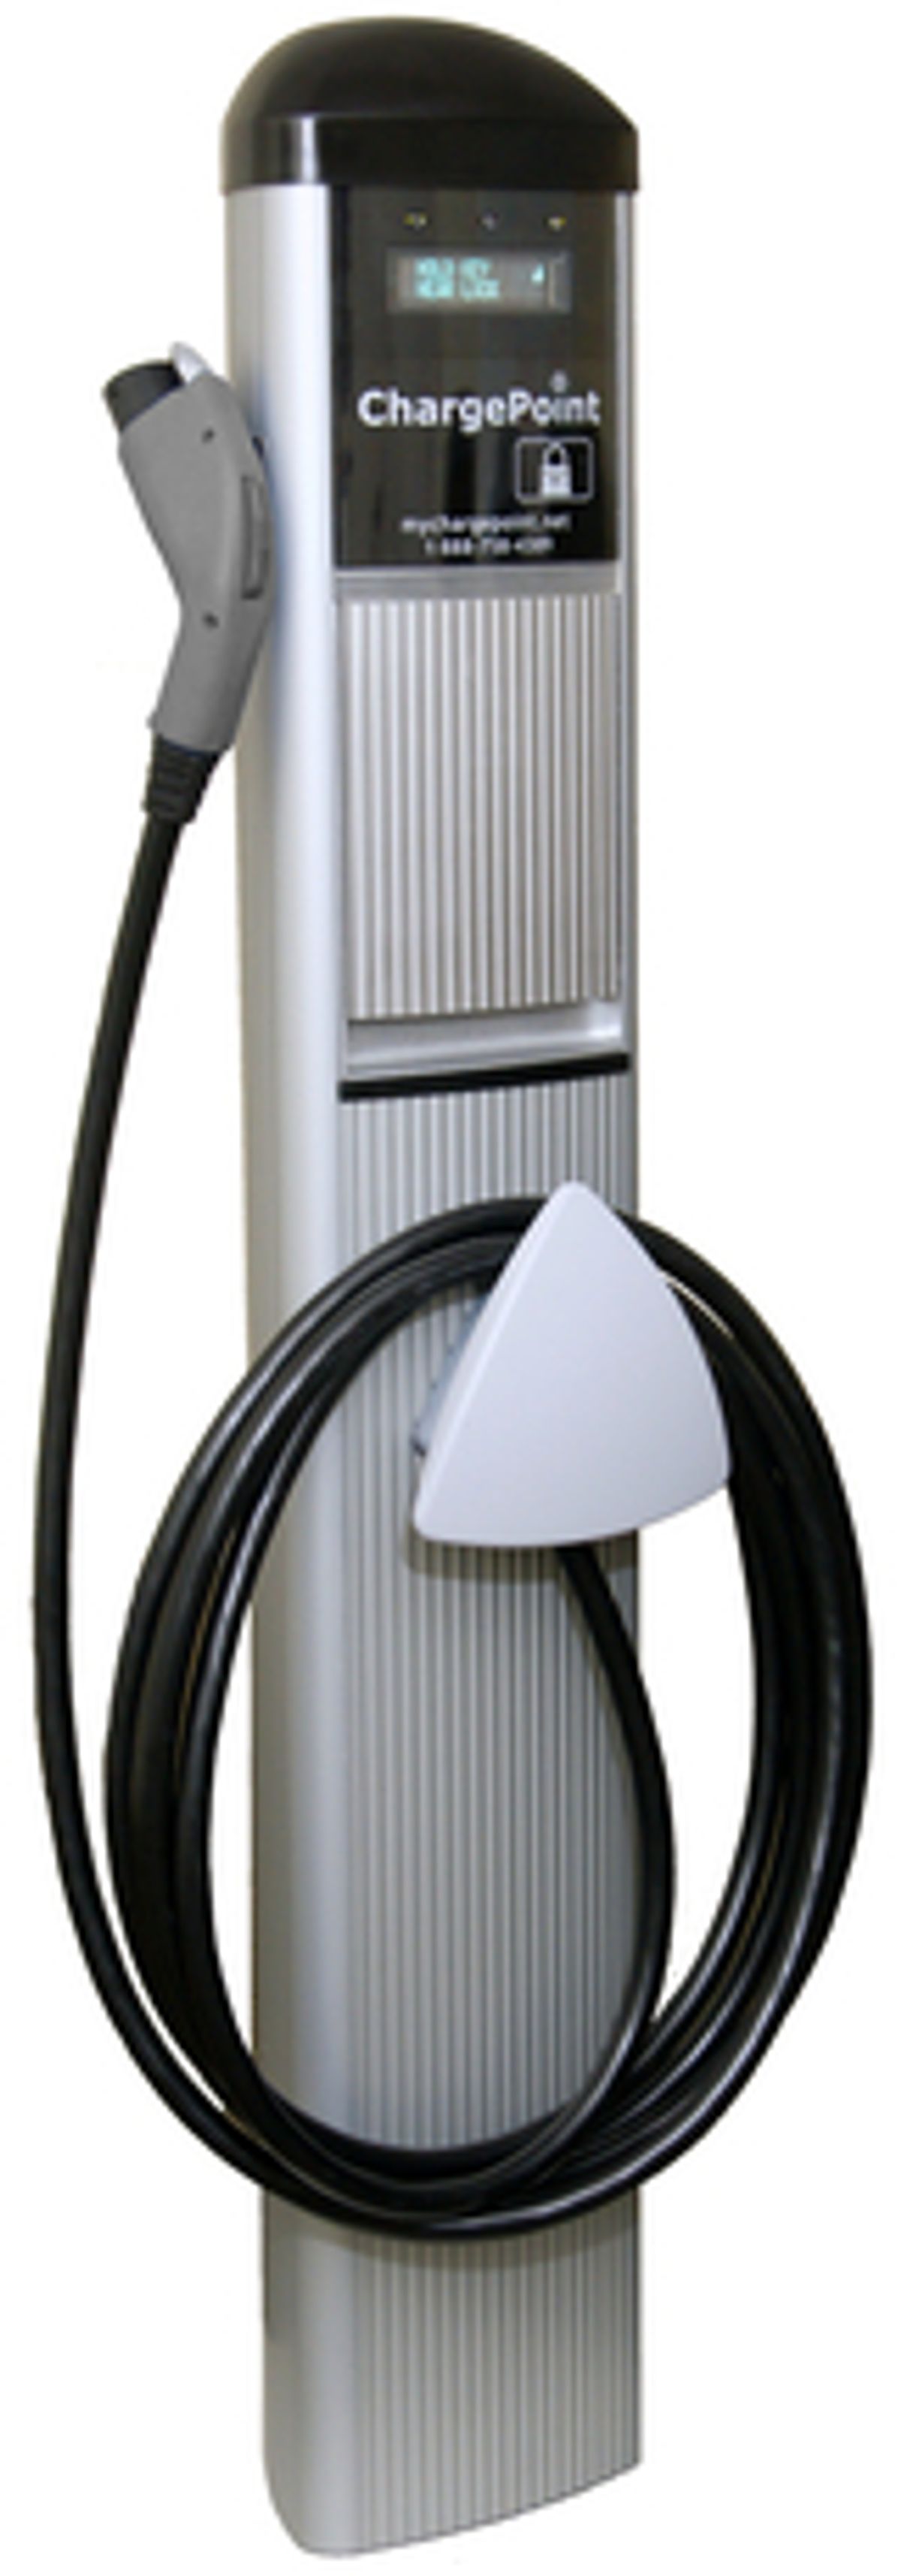 Electric Car Charging Stations to Be Deployed in Nine U.S. Metropolitan Areas